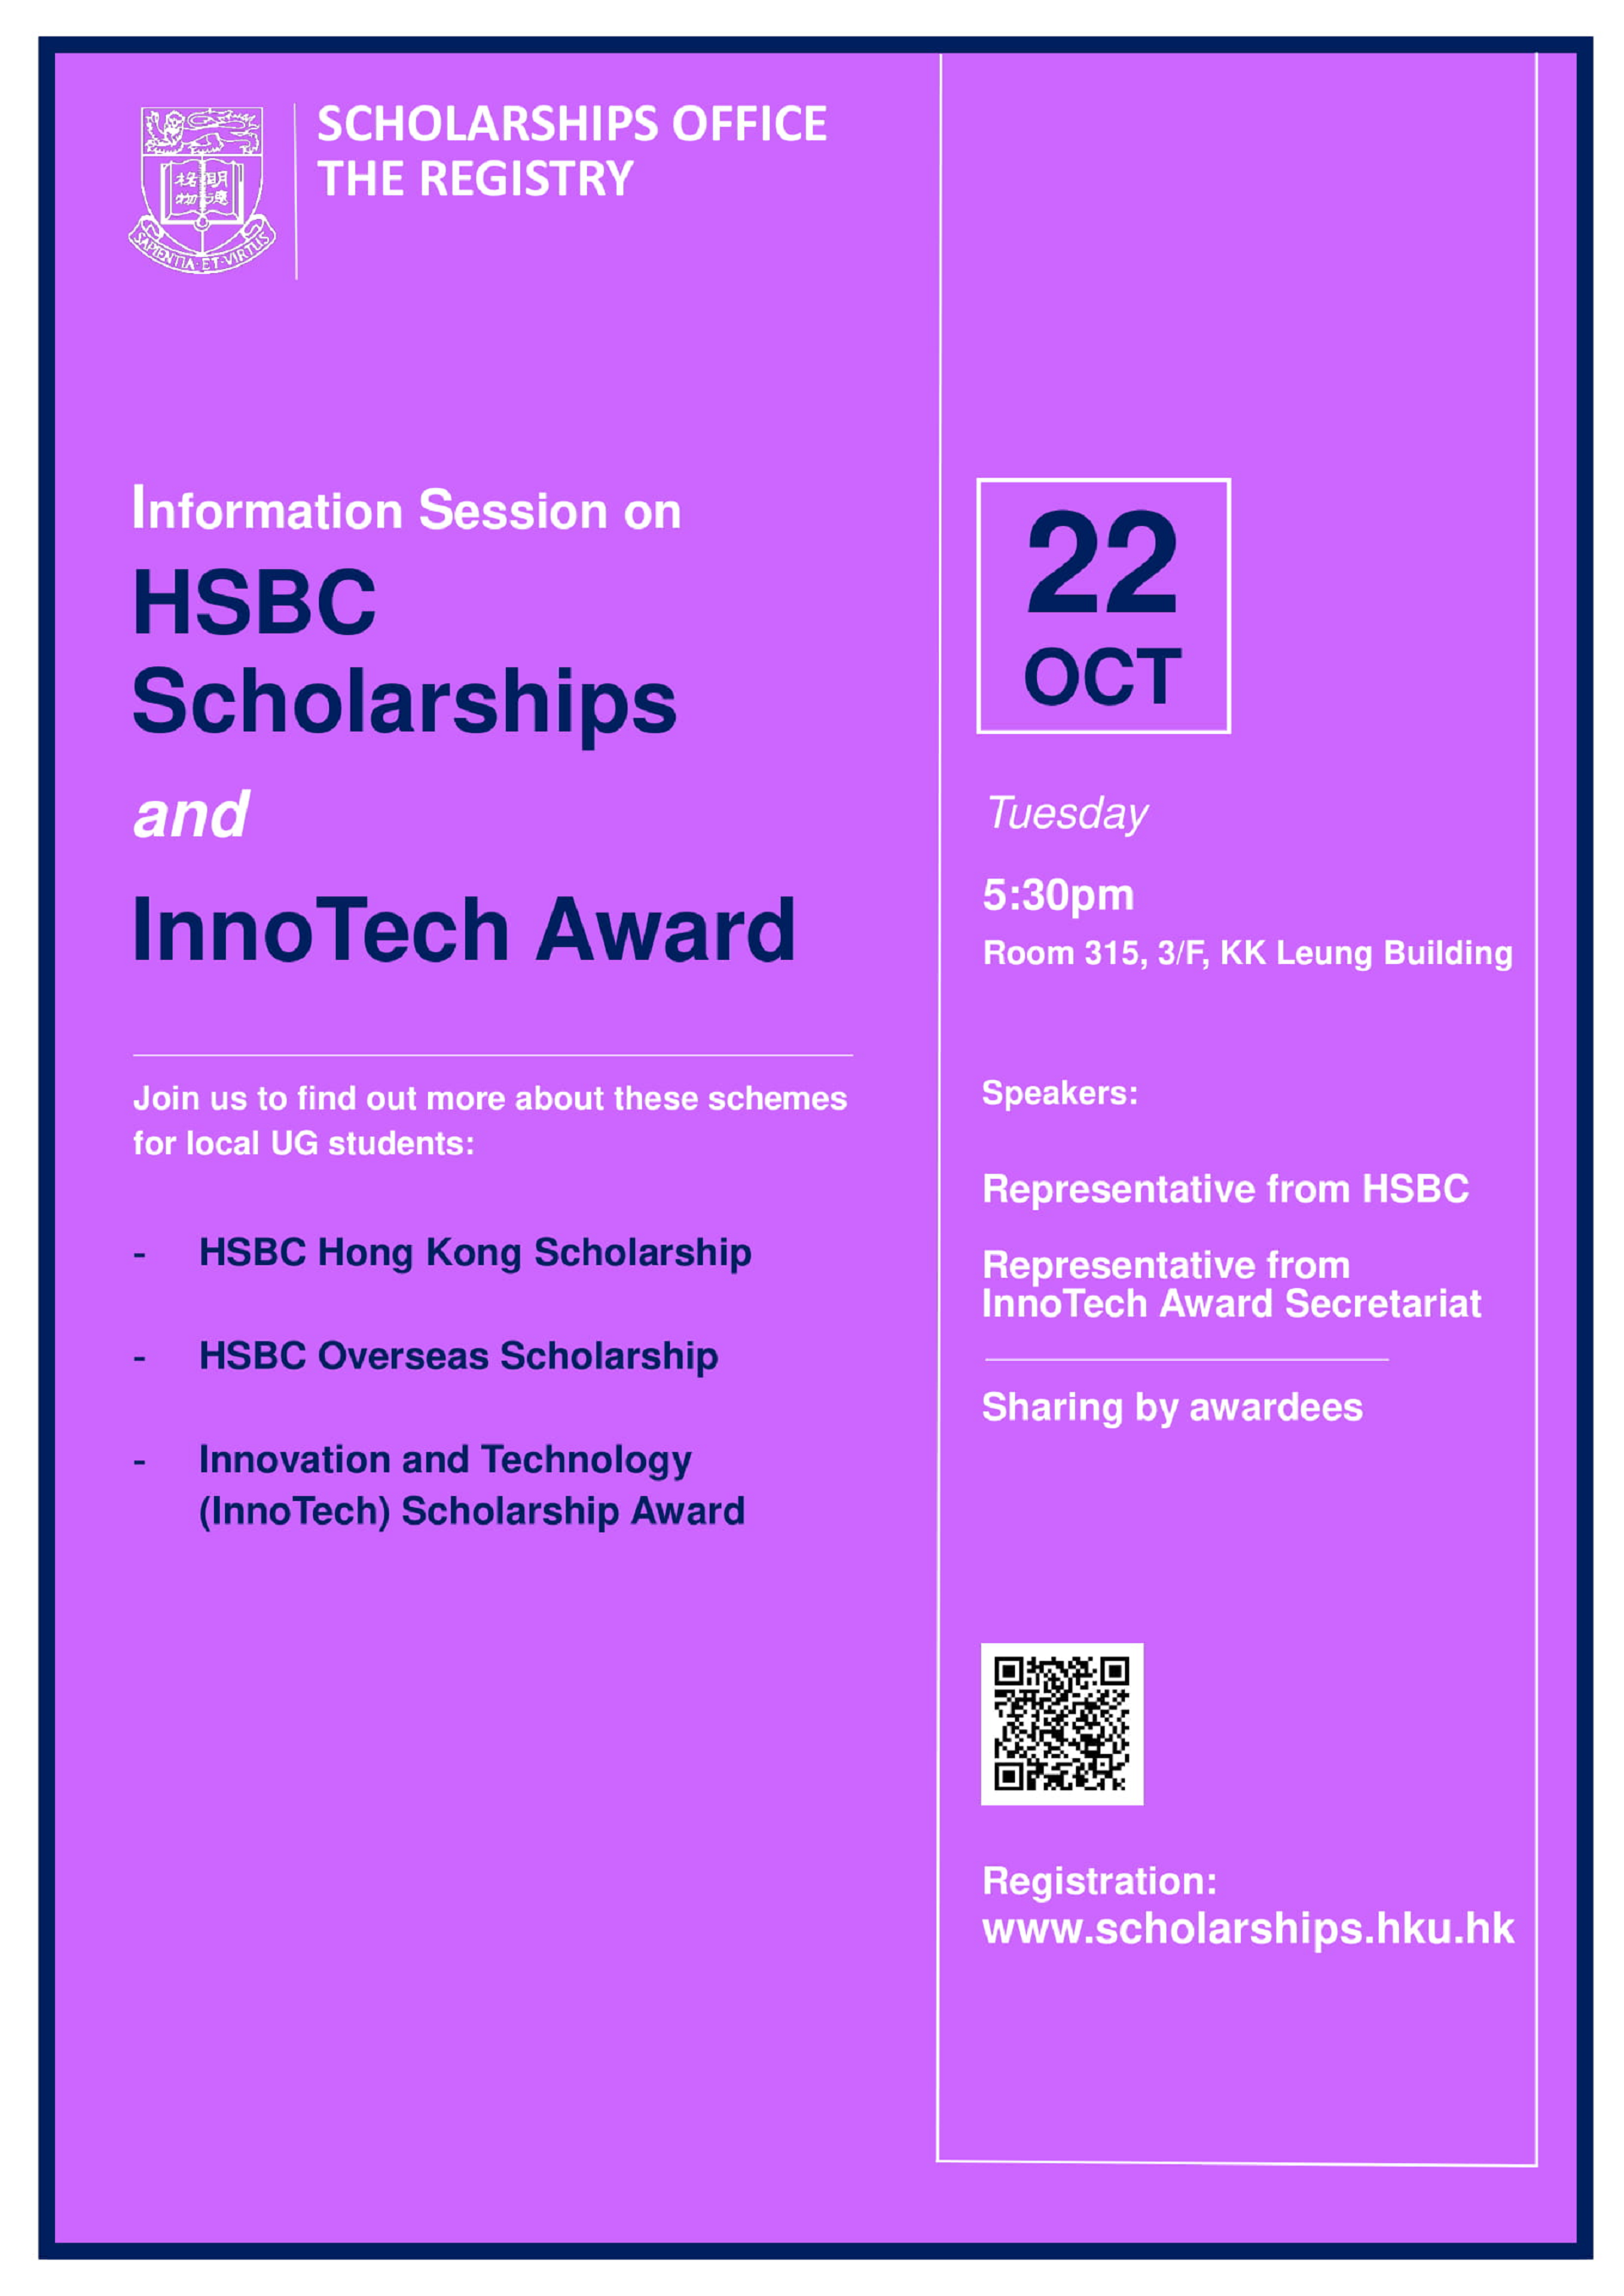 HSBC Scholarships and InnoTech